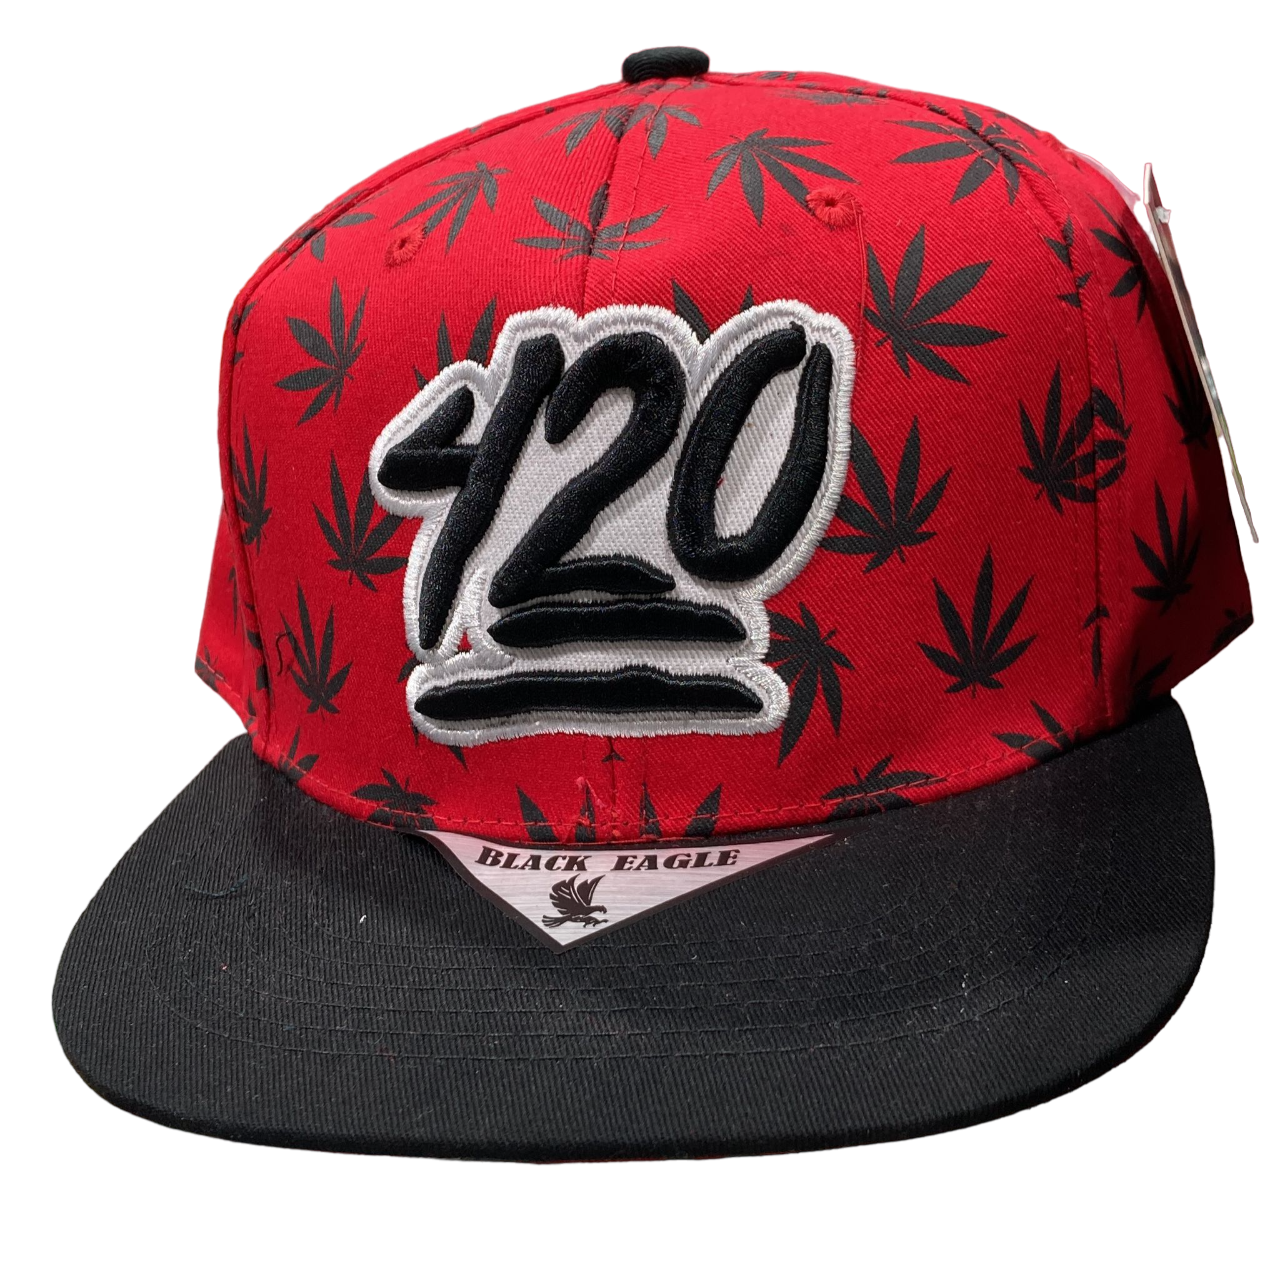 Adjustable Baseball Hat - 420 Marijuana Printed (Red/Black) - MK Distro